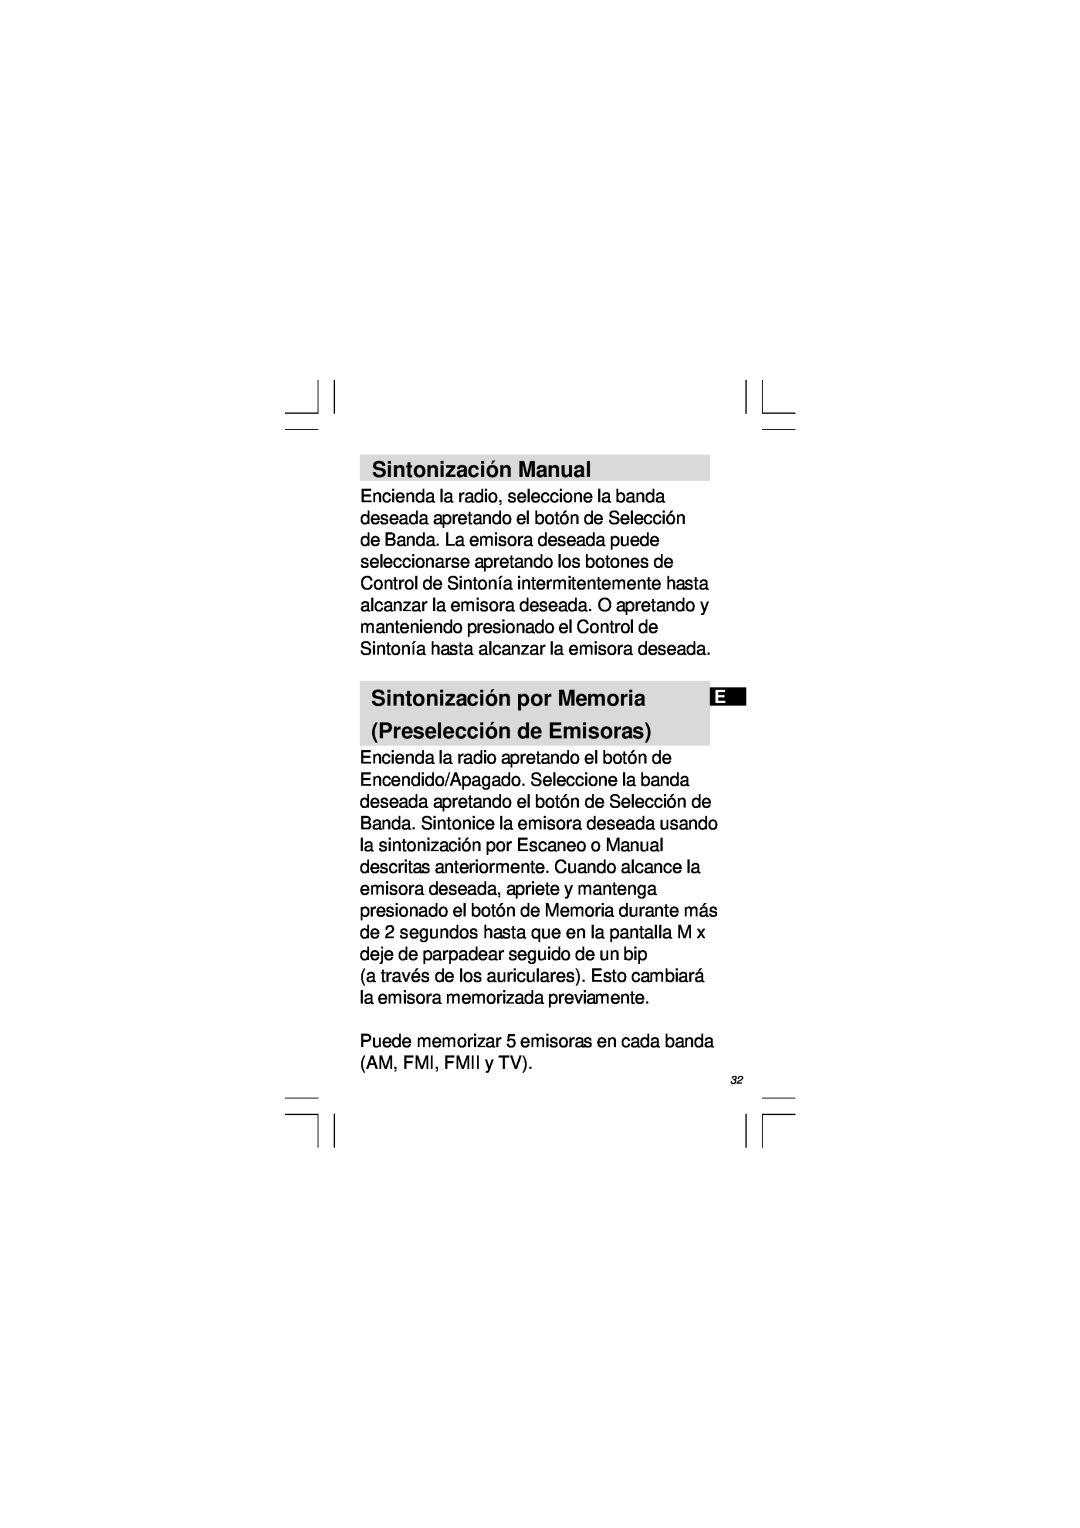 Sangean Electronics DT-120 manual Sintonización Manual, Sintonización por Memoria Preselección de Emisoras 